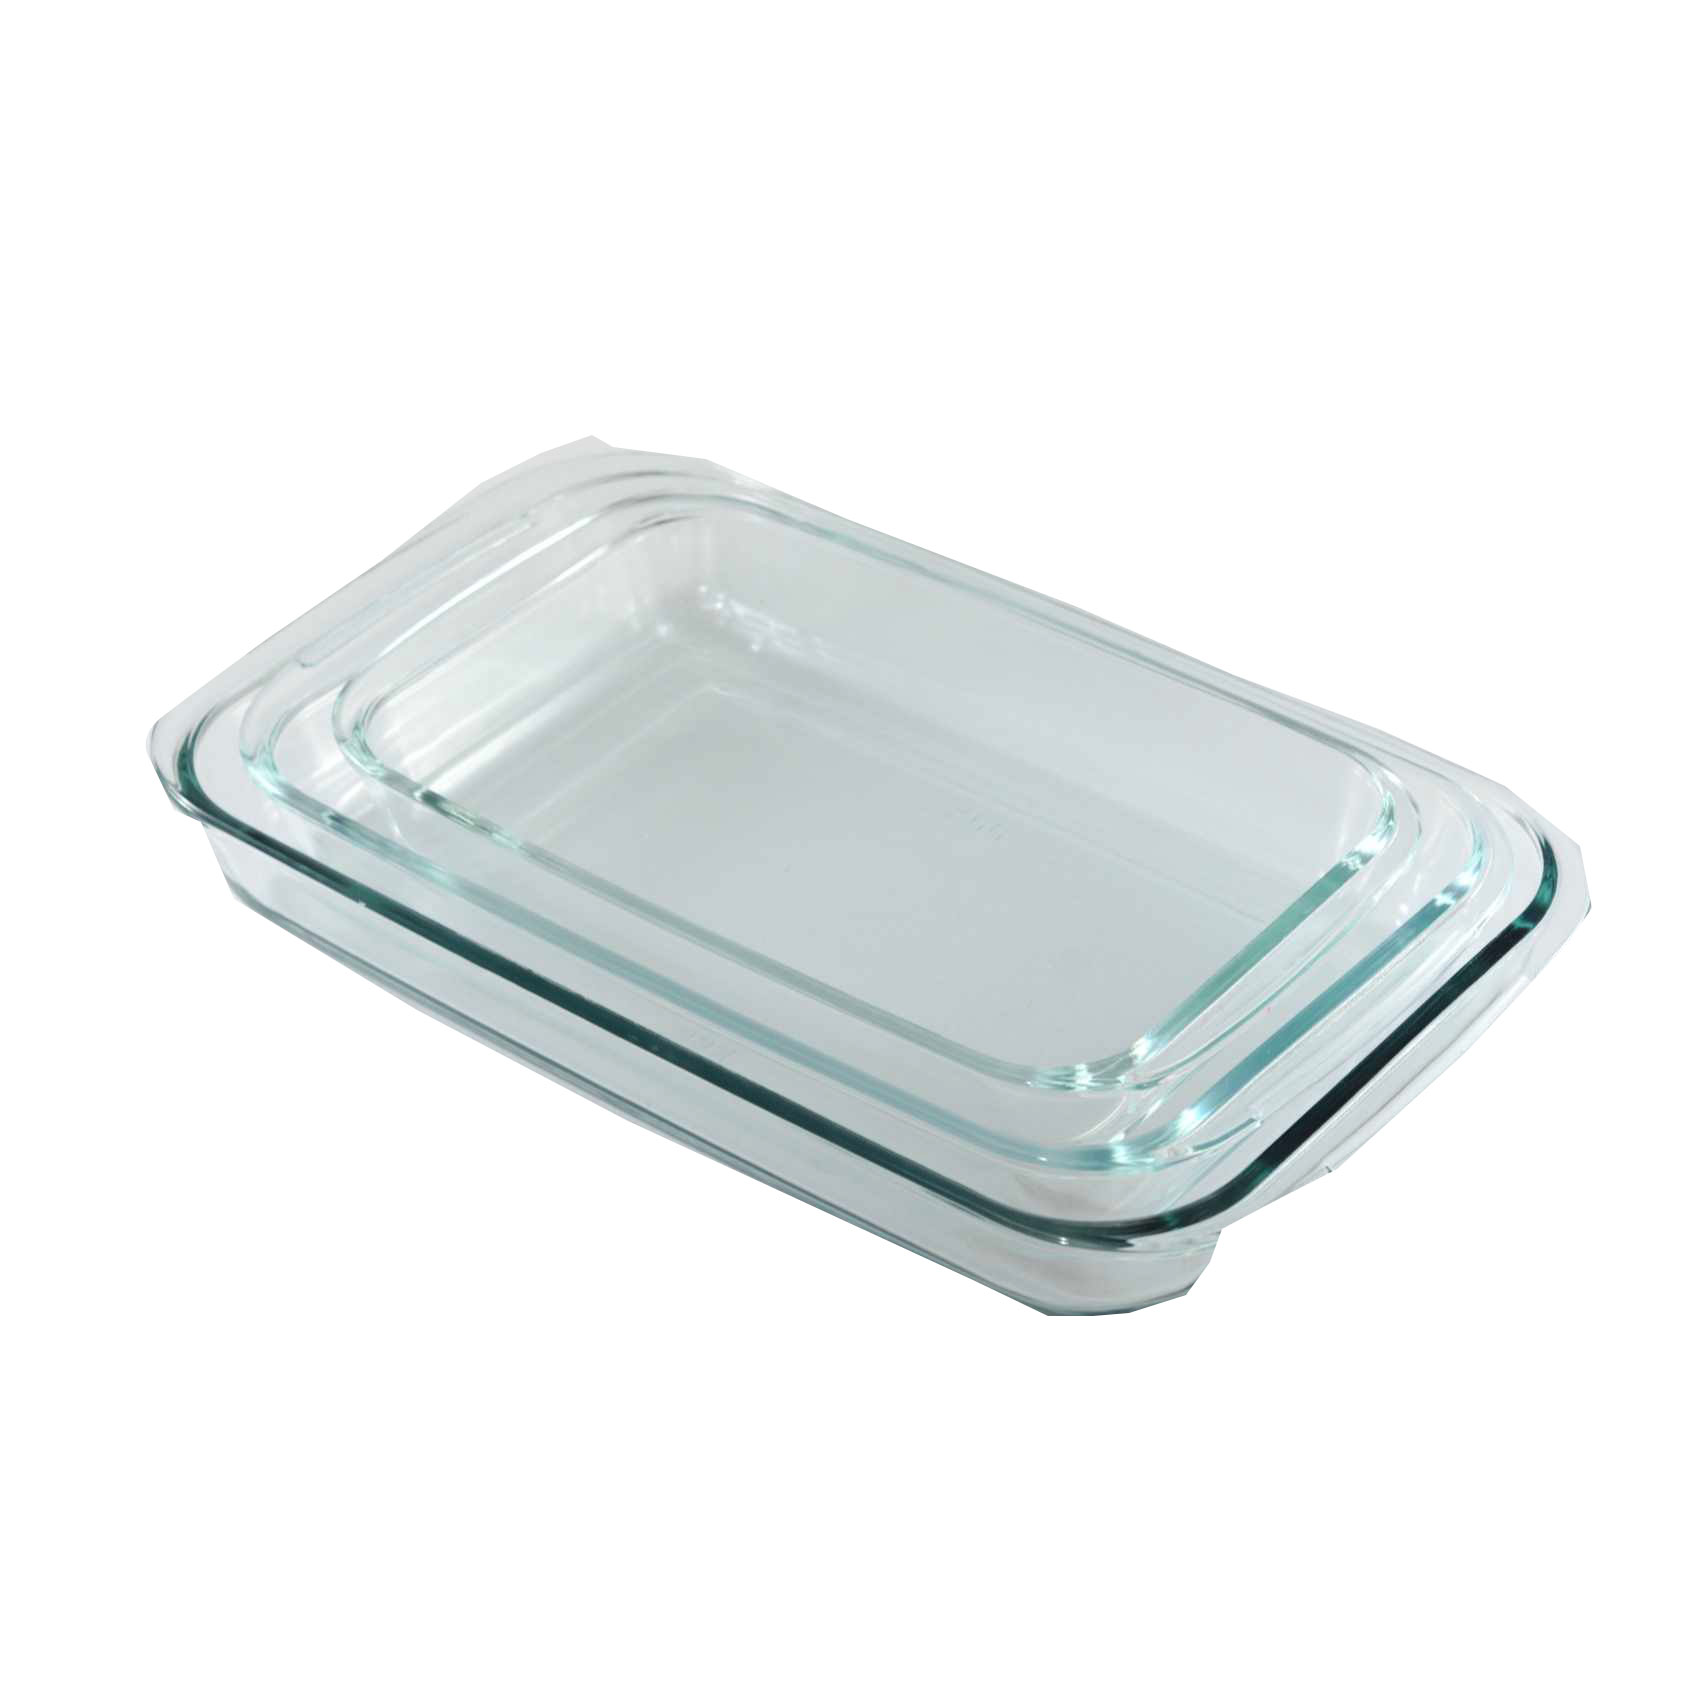 Home Maker Rectangular Glass Baking Dish Clear 3 PCS